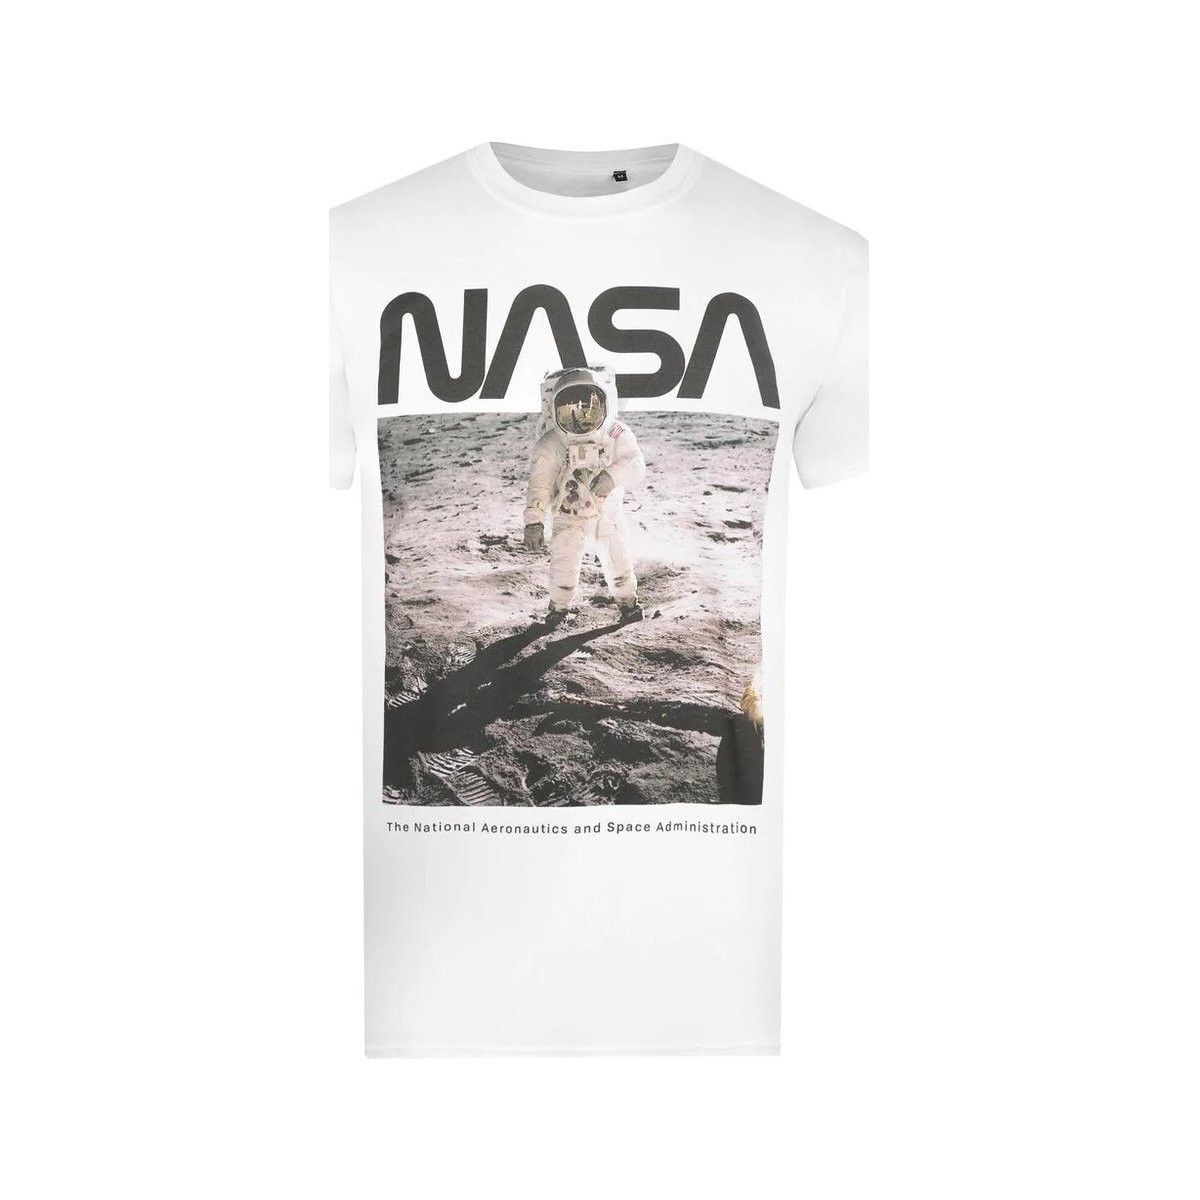 Vêtements Homme T-shirts manches longues Nasa Aldrin Blanc